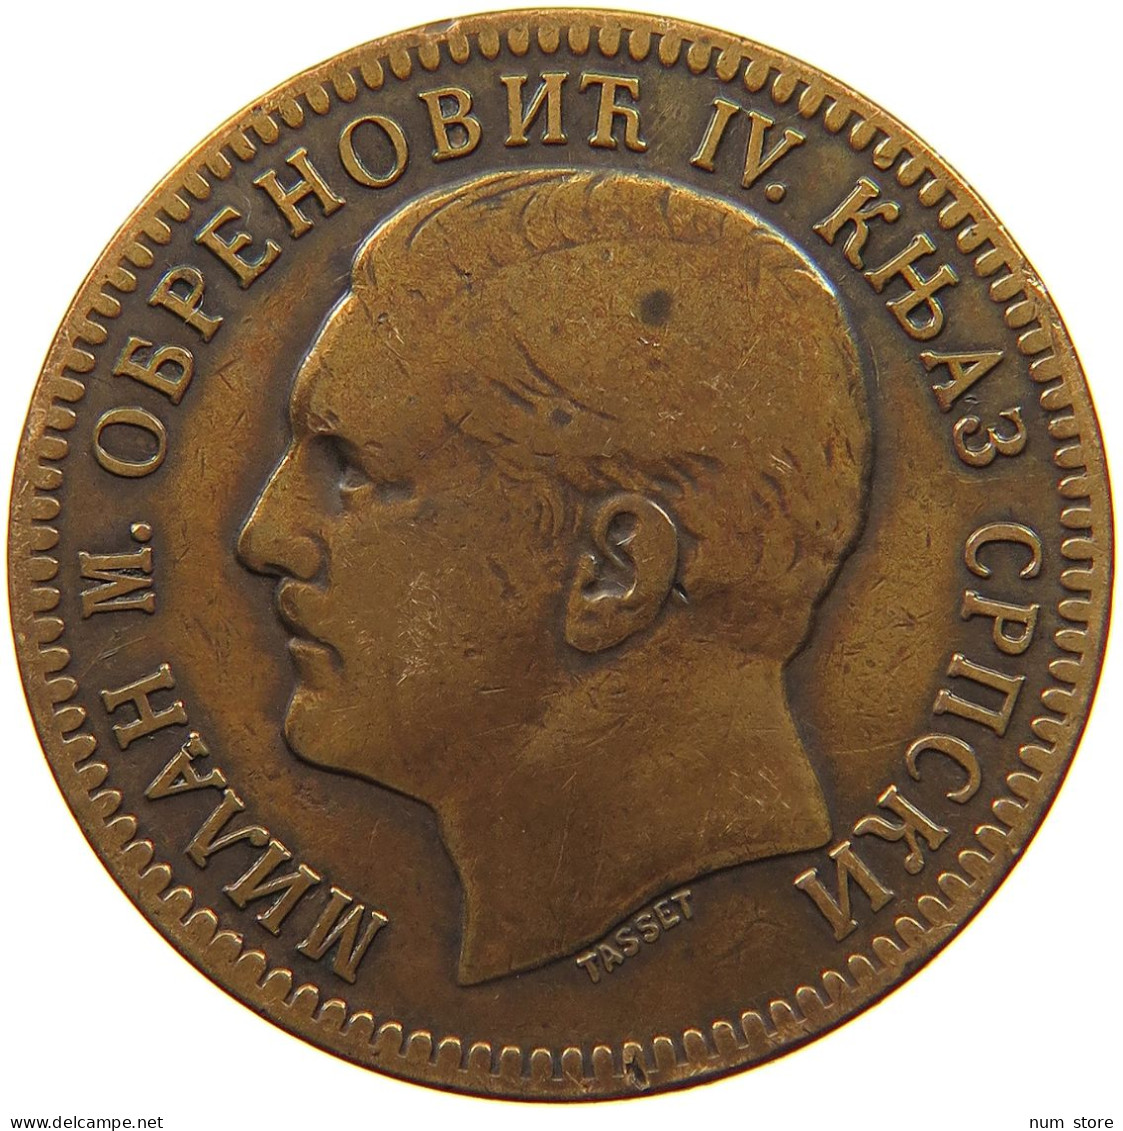 SERBIA 10 PARA 1879 Milan Obrenovich IV. #t091 0185 - Serbia